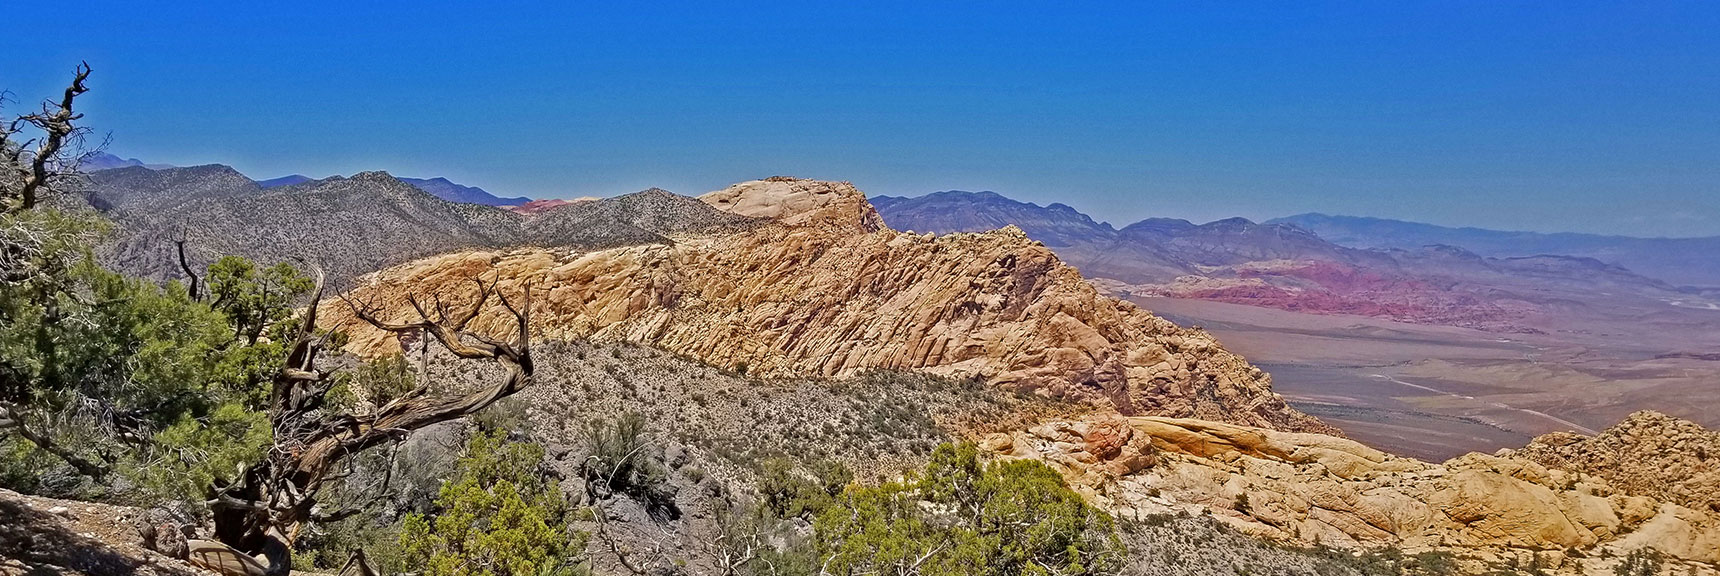 Indecision Peak, Mt. Wilson Behind, Calico Hills Lower Right | Rainbow Mountains Upper Crest Ridge, Nevada